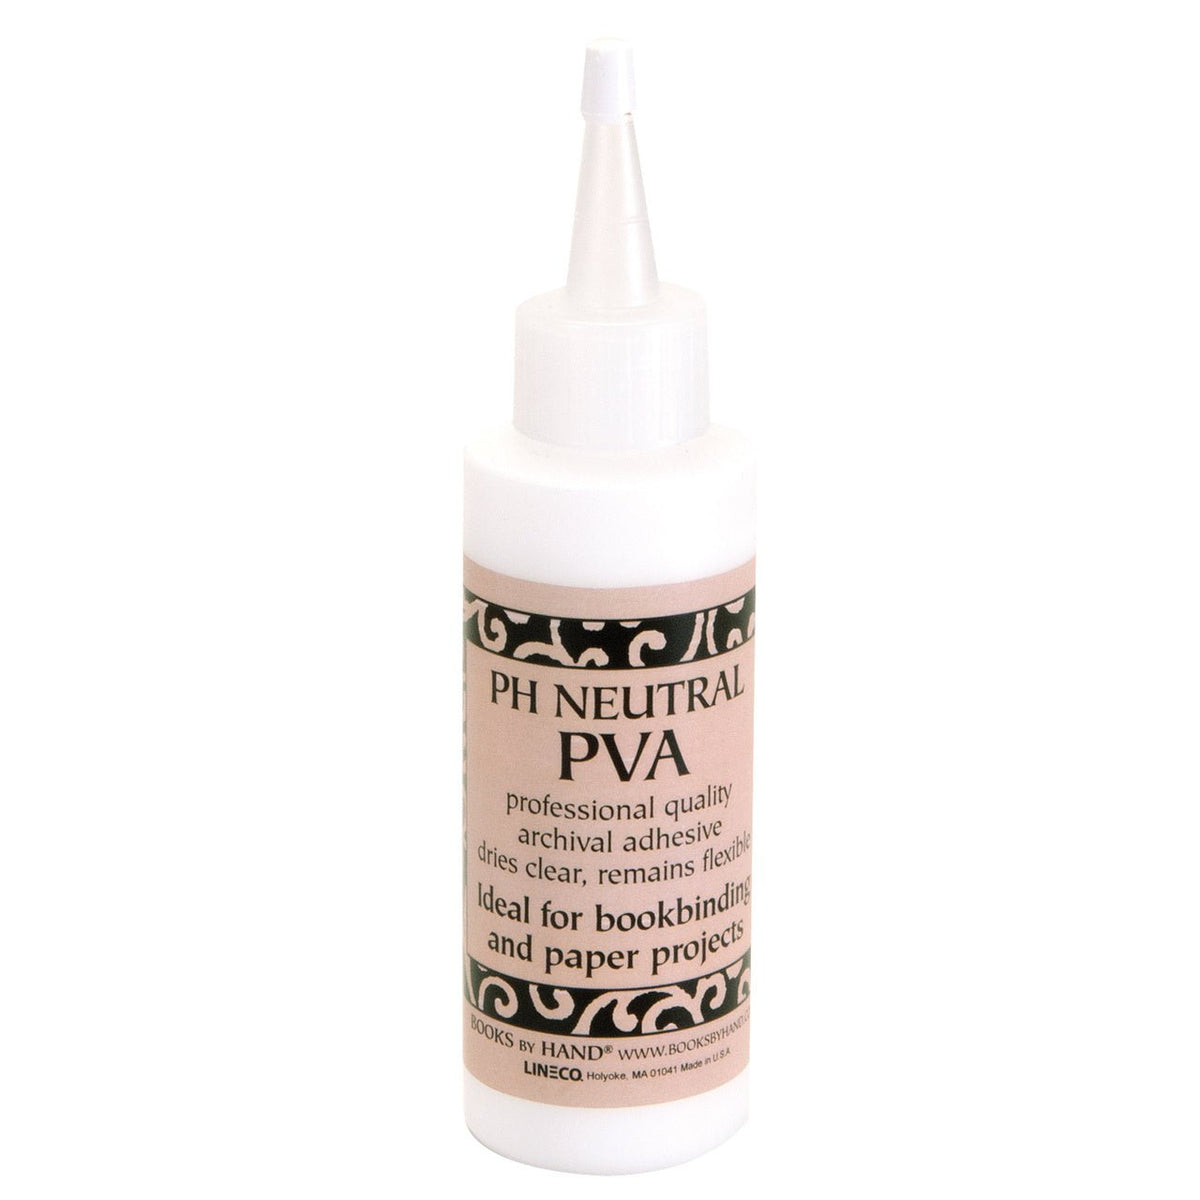 pH Neutral PVA Adhesive 4 oz. - merriartist.com